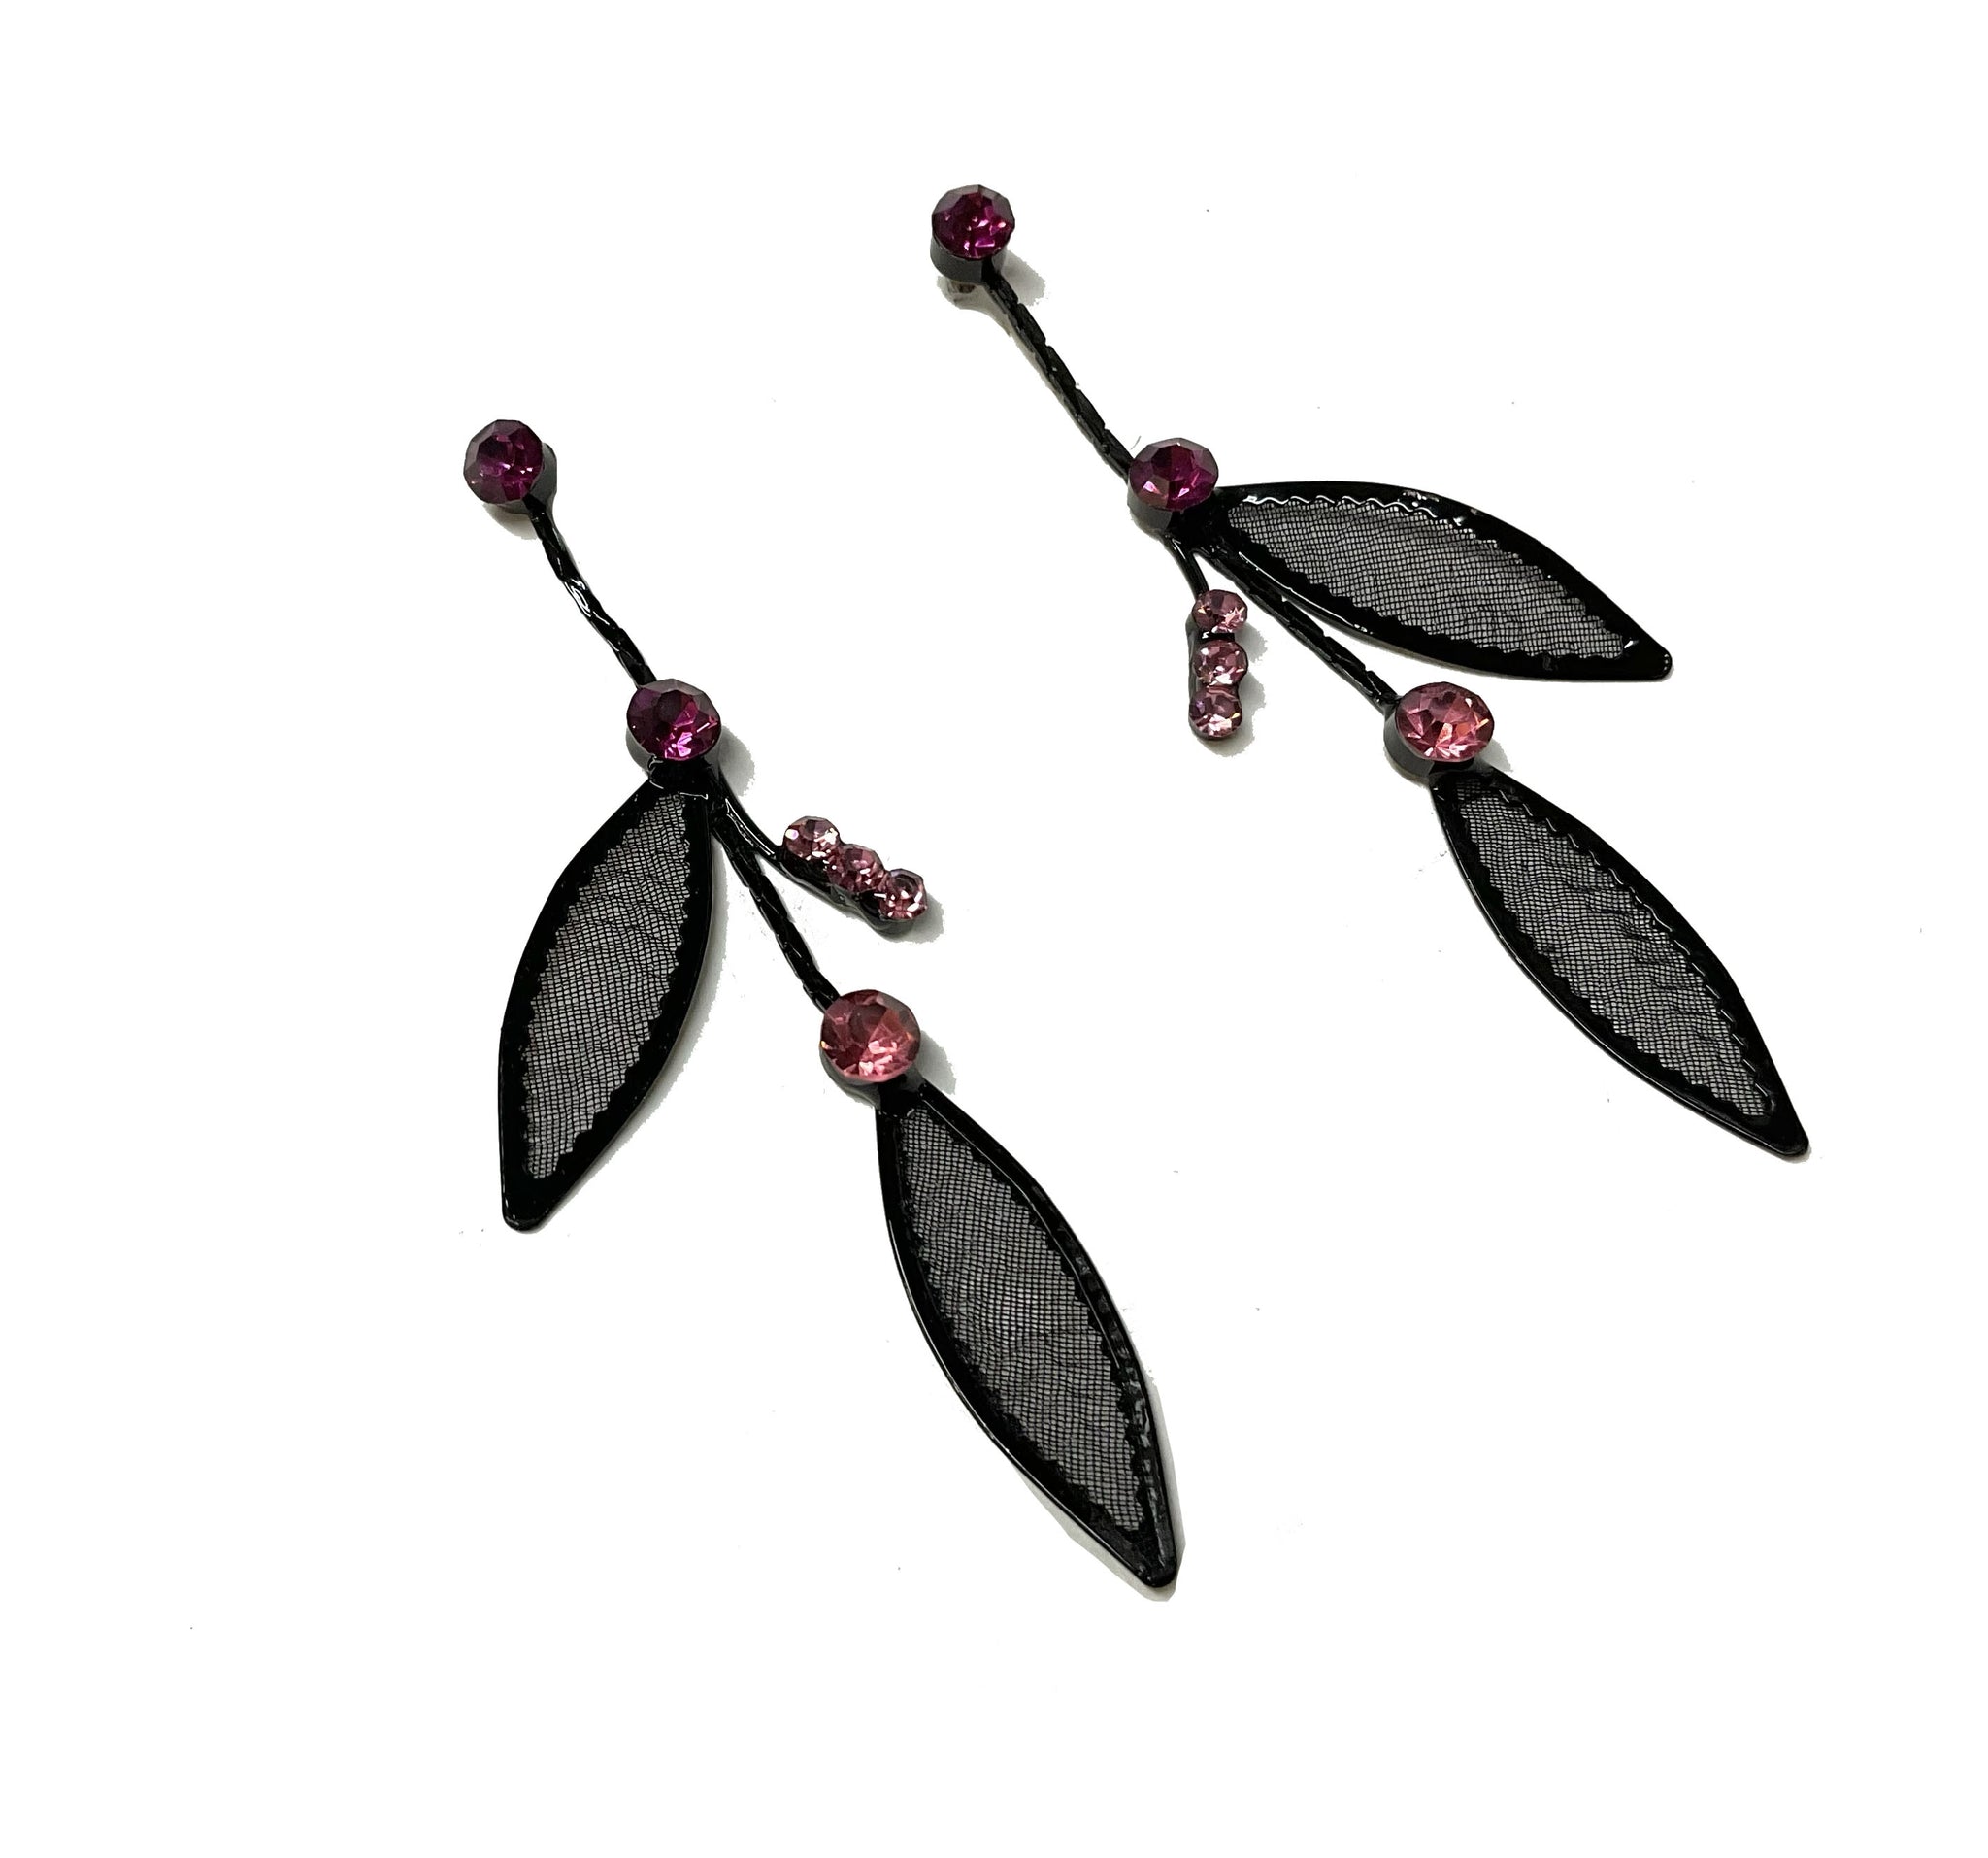 Mesh Flower Necklace/Earring Set (Pink) #66-23198PK